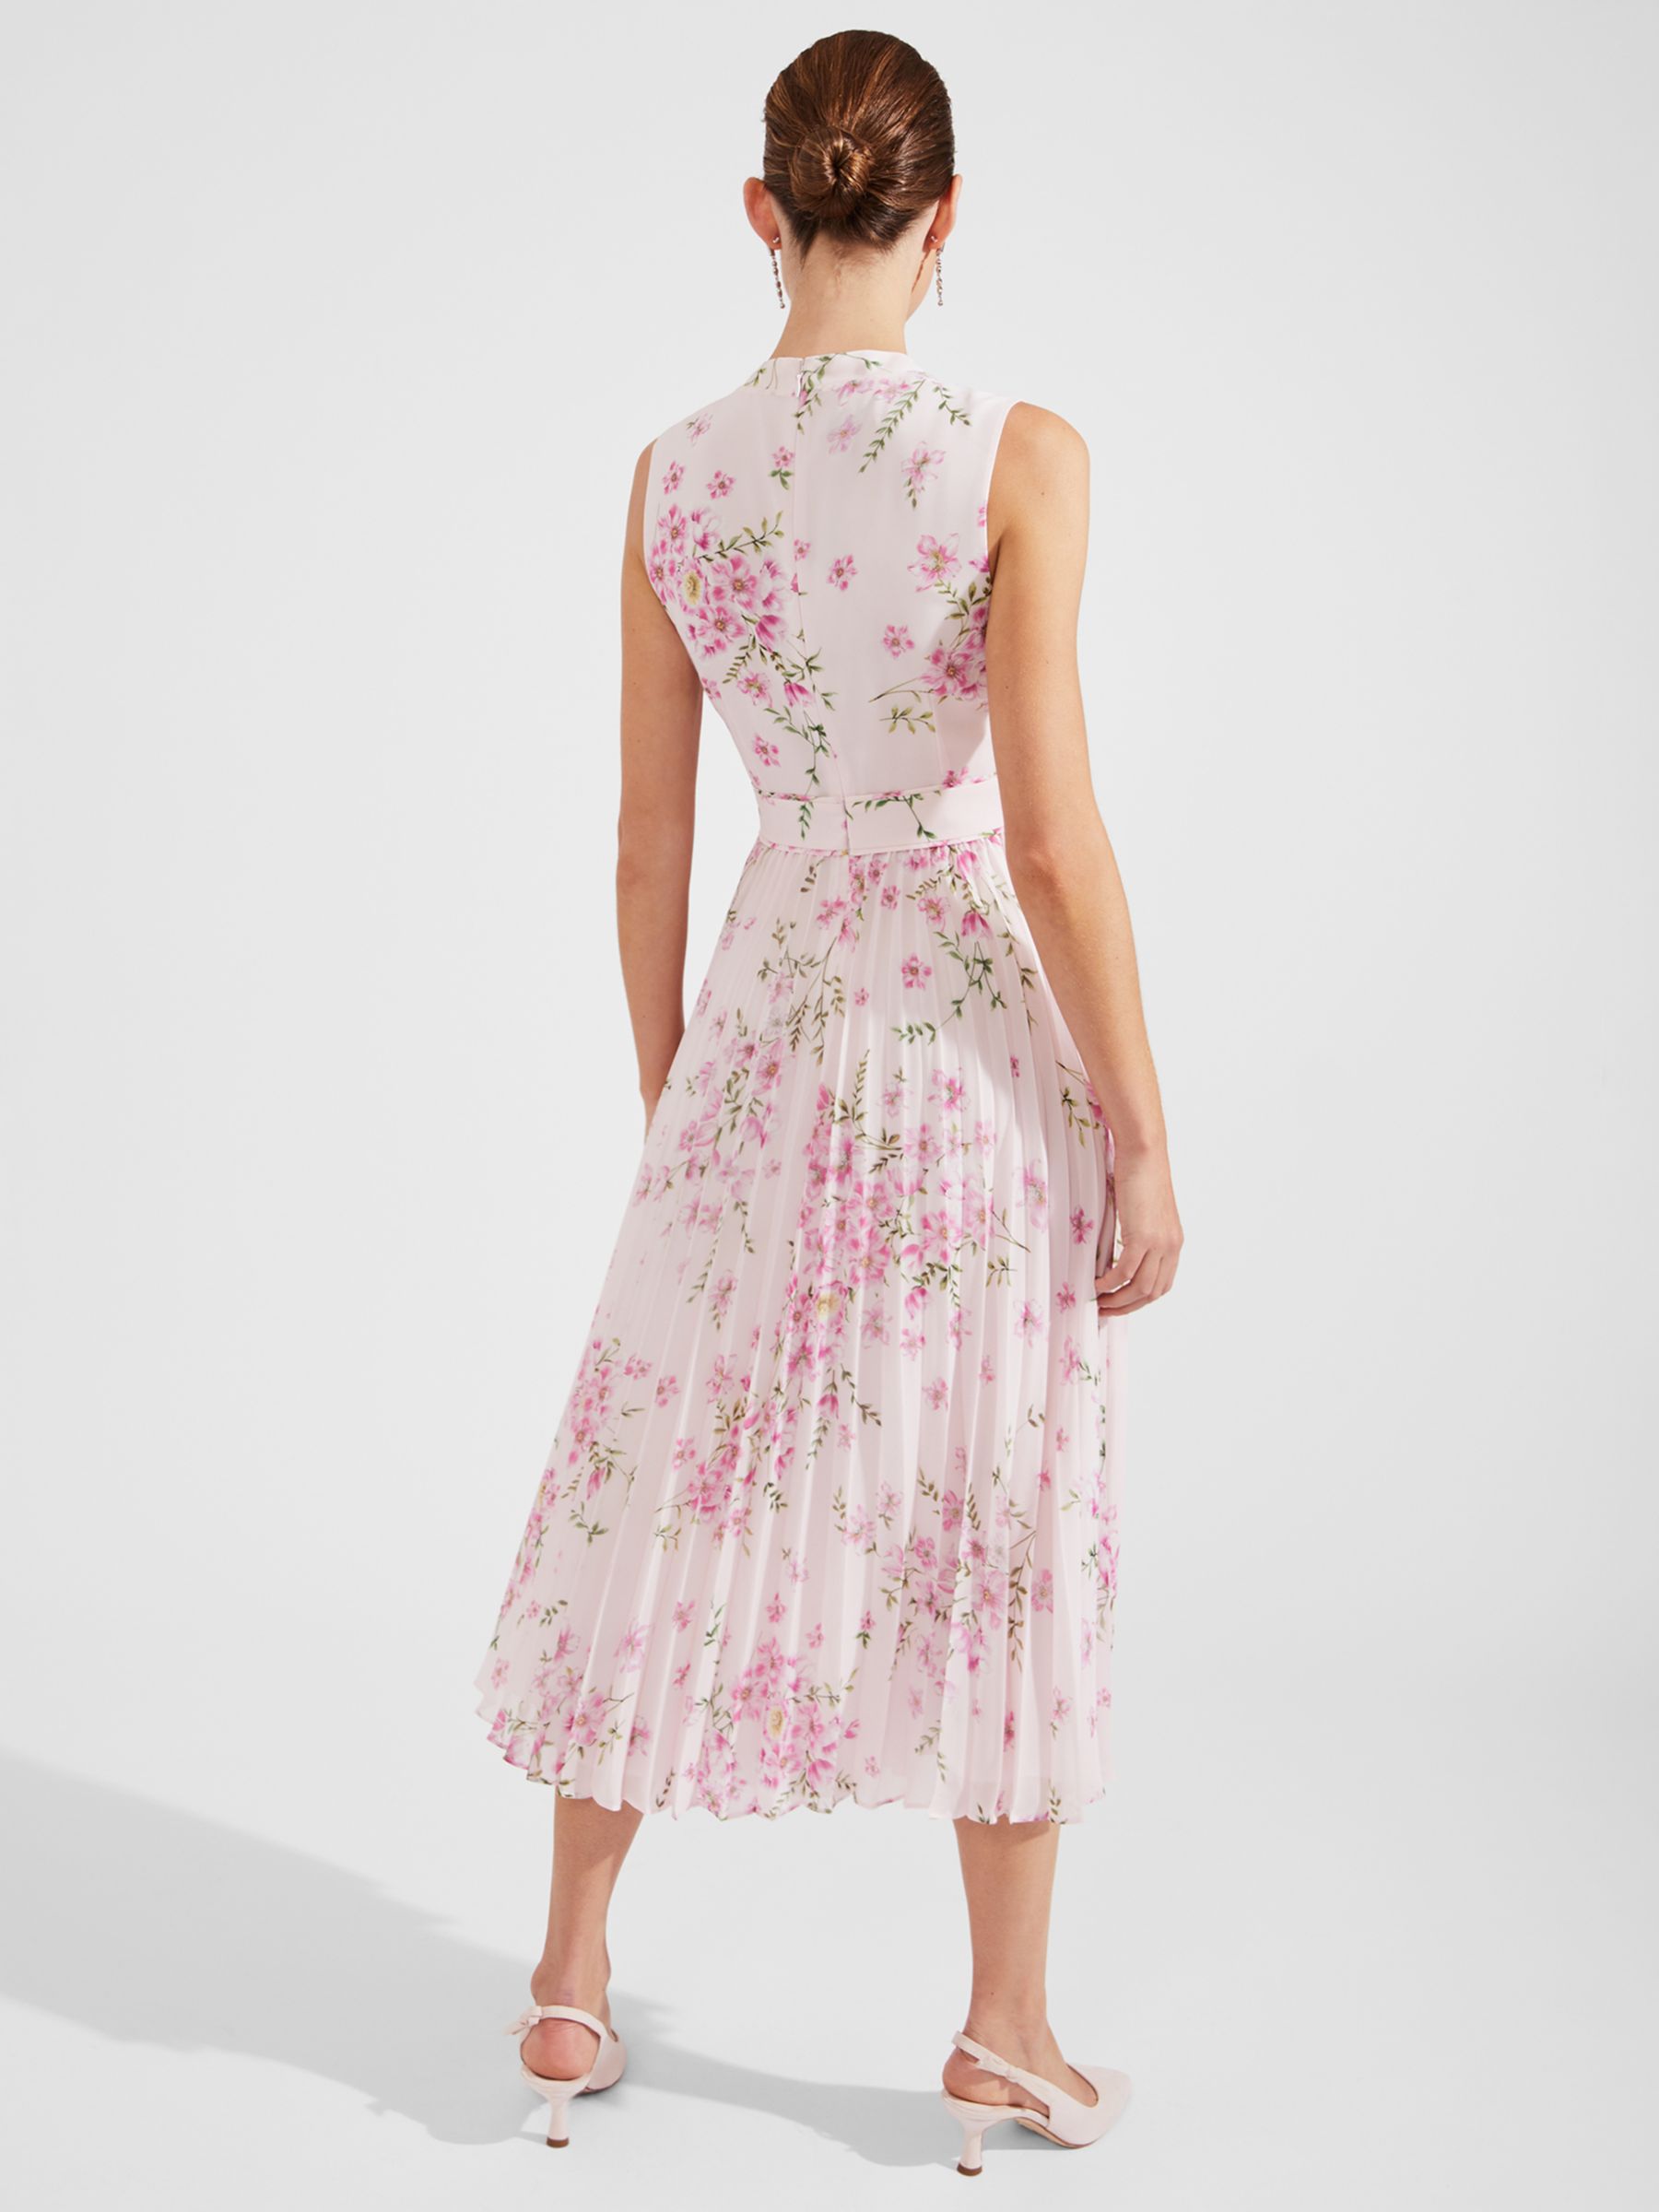 Hobbs Veronica Floral Print Pleated Maxi Dress, Pink/Multi, 8